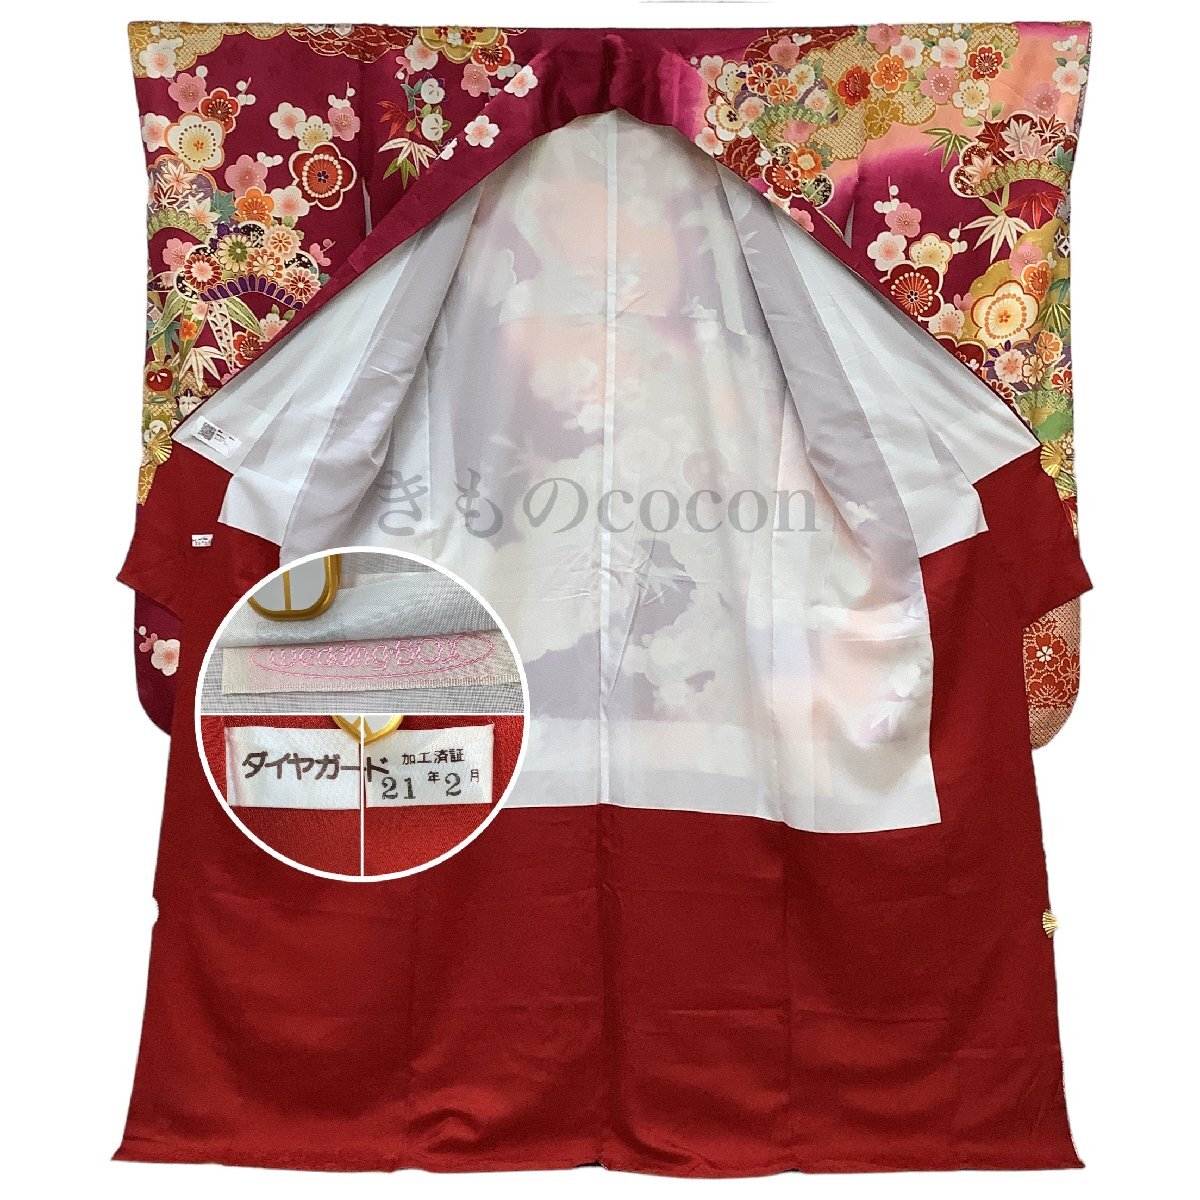  kimono cocon* long-sleeved kimono gold piece embroidery length 170.5 sleeve length 69.5 silk red purple series coming-of-age ceremony graduation ceremony wedding obi * small articles optional [4-20-15K-0101-j]